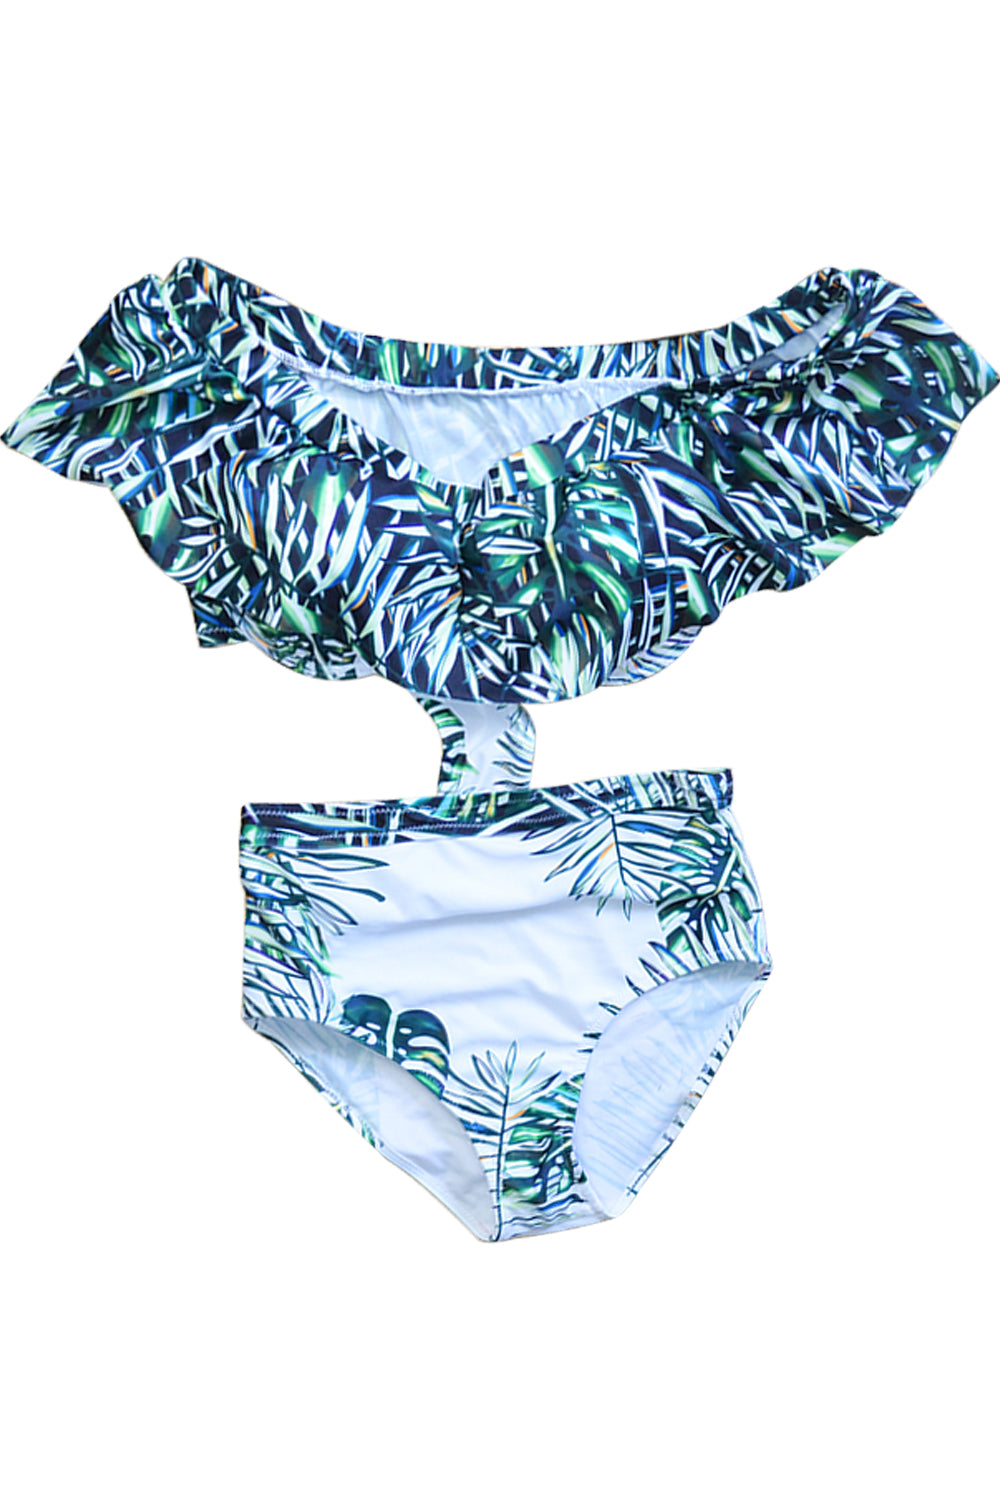 Iyasson Tropical Palm Leaves Printing Falbala One-piece Swimsuit